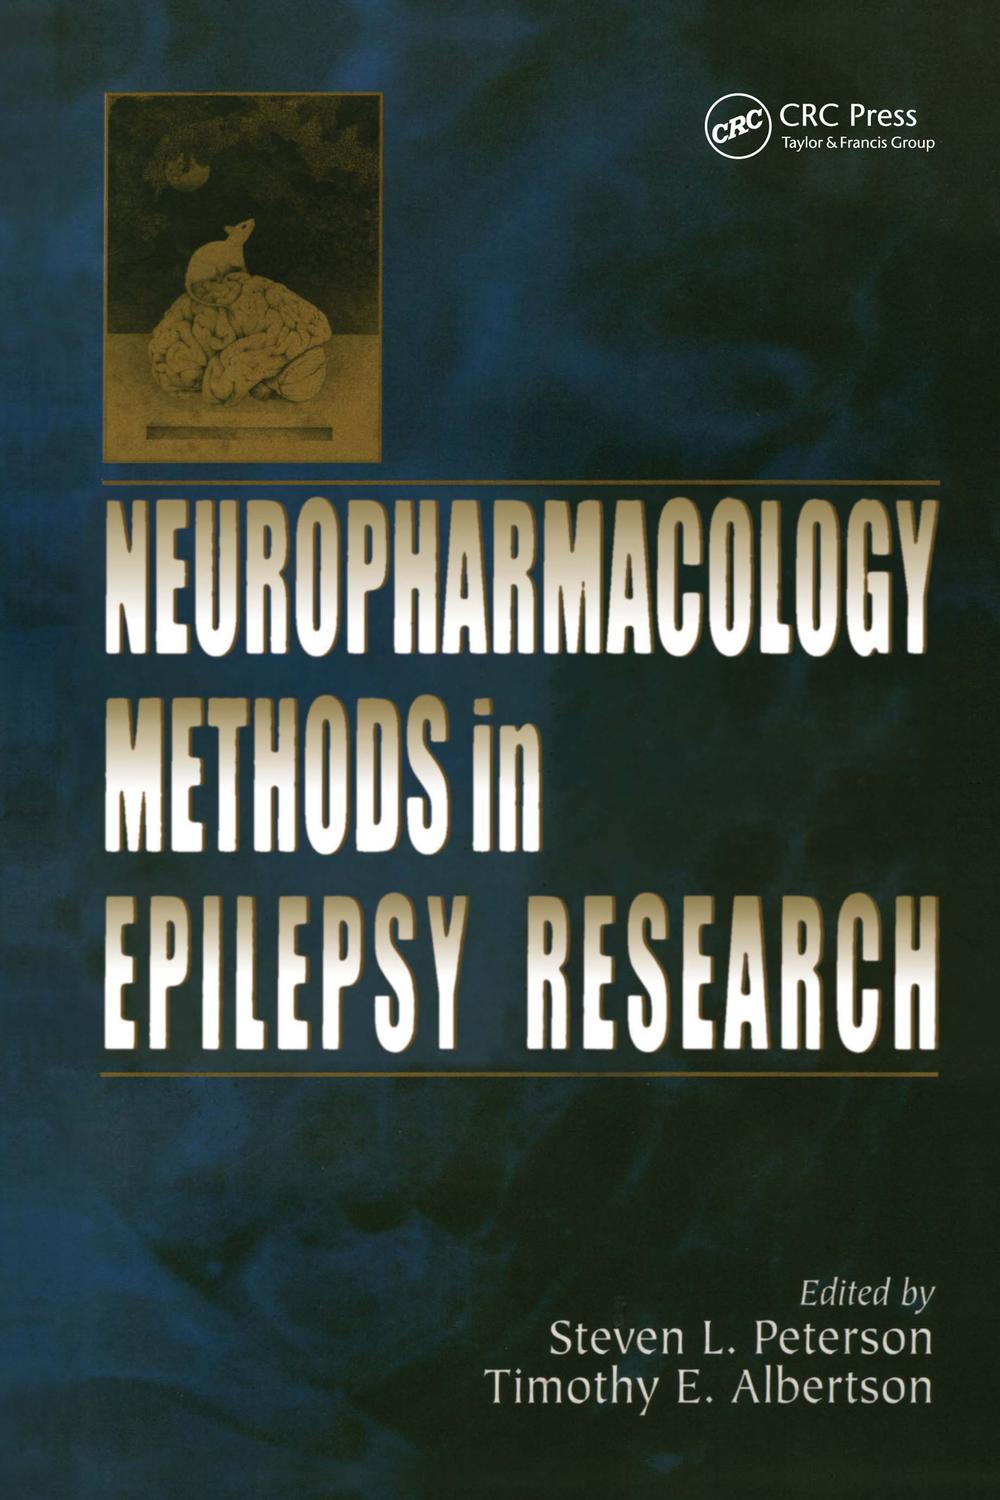 Neuropharmacology Methods in Epilepsy Research - Steven L. Peterson, Timothy E. Albertson